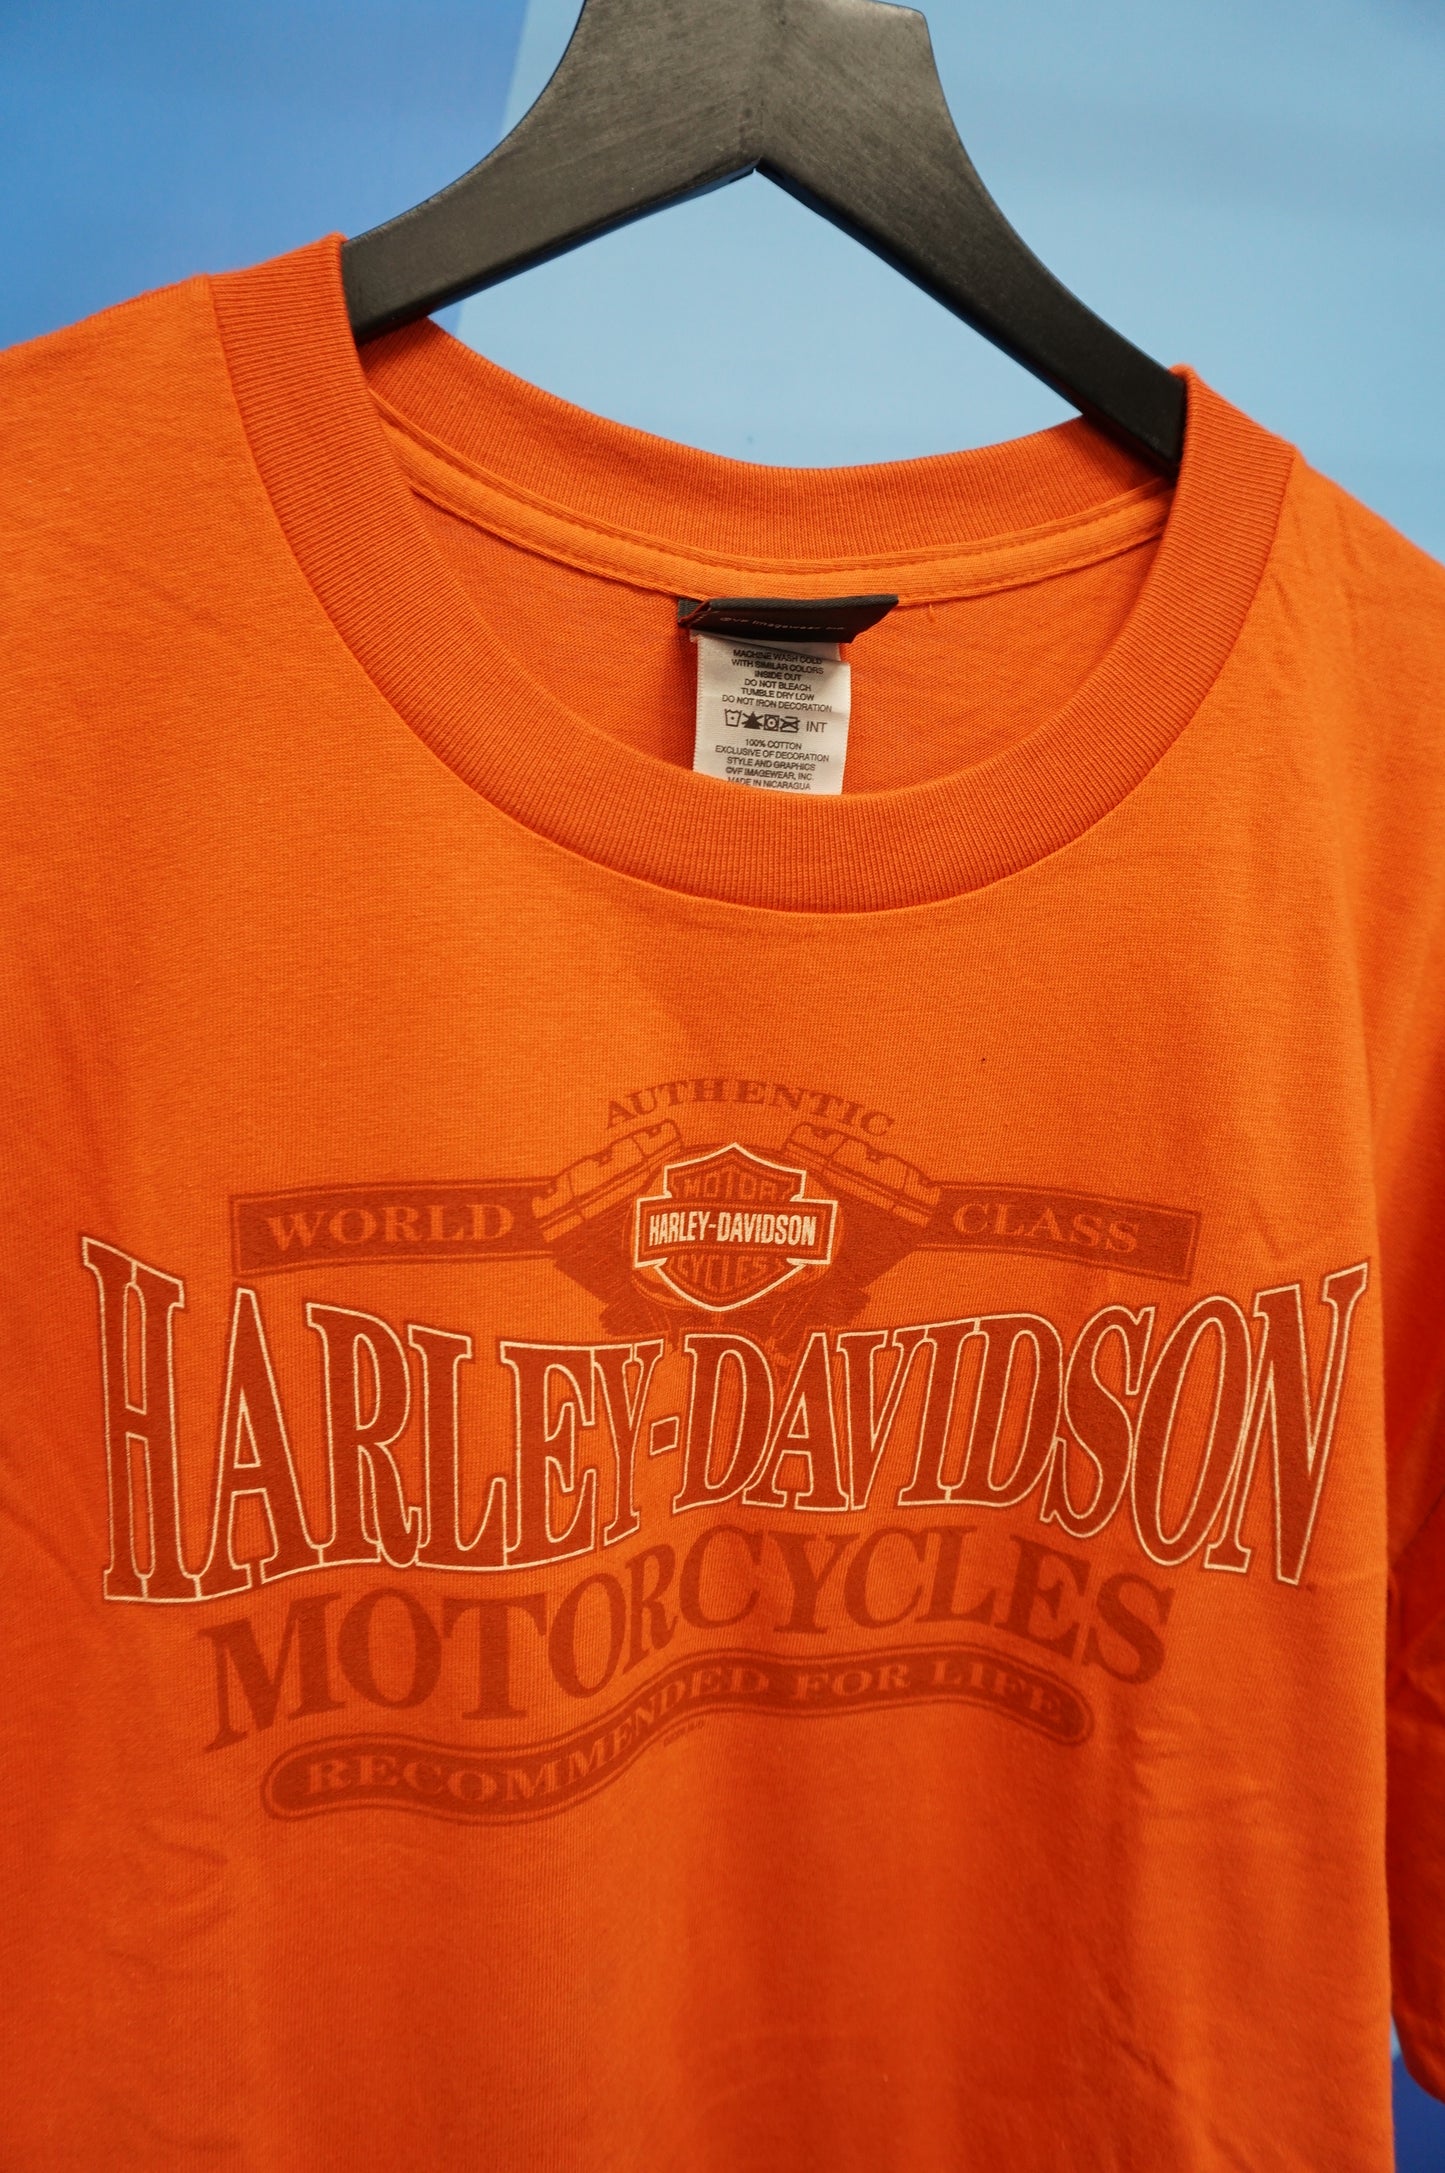 (XXL) Durango Harley Davidson T-Shirt